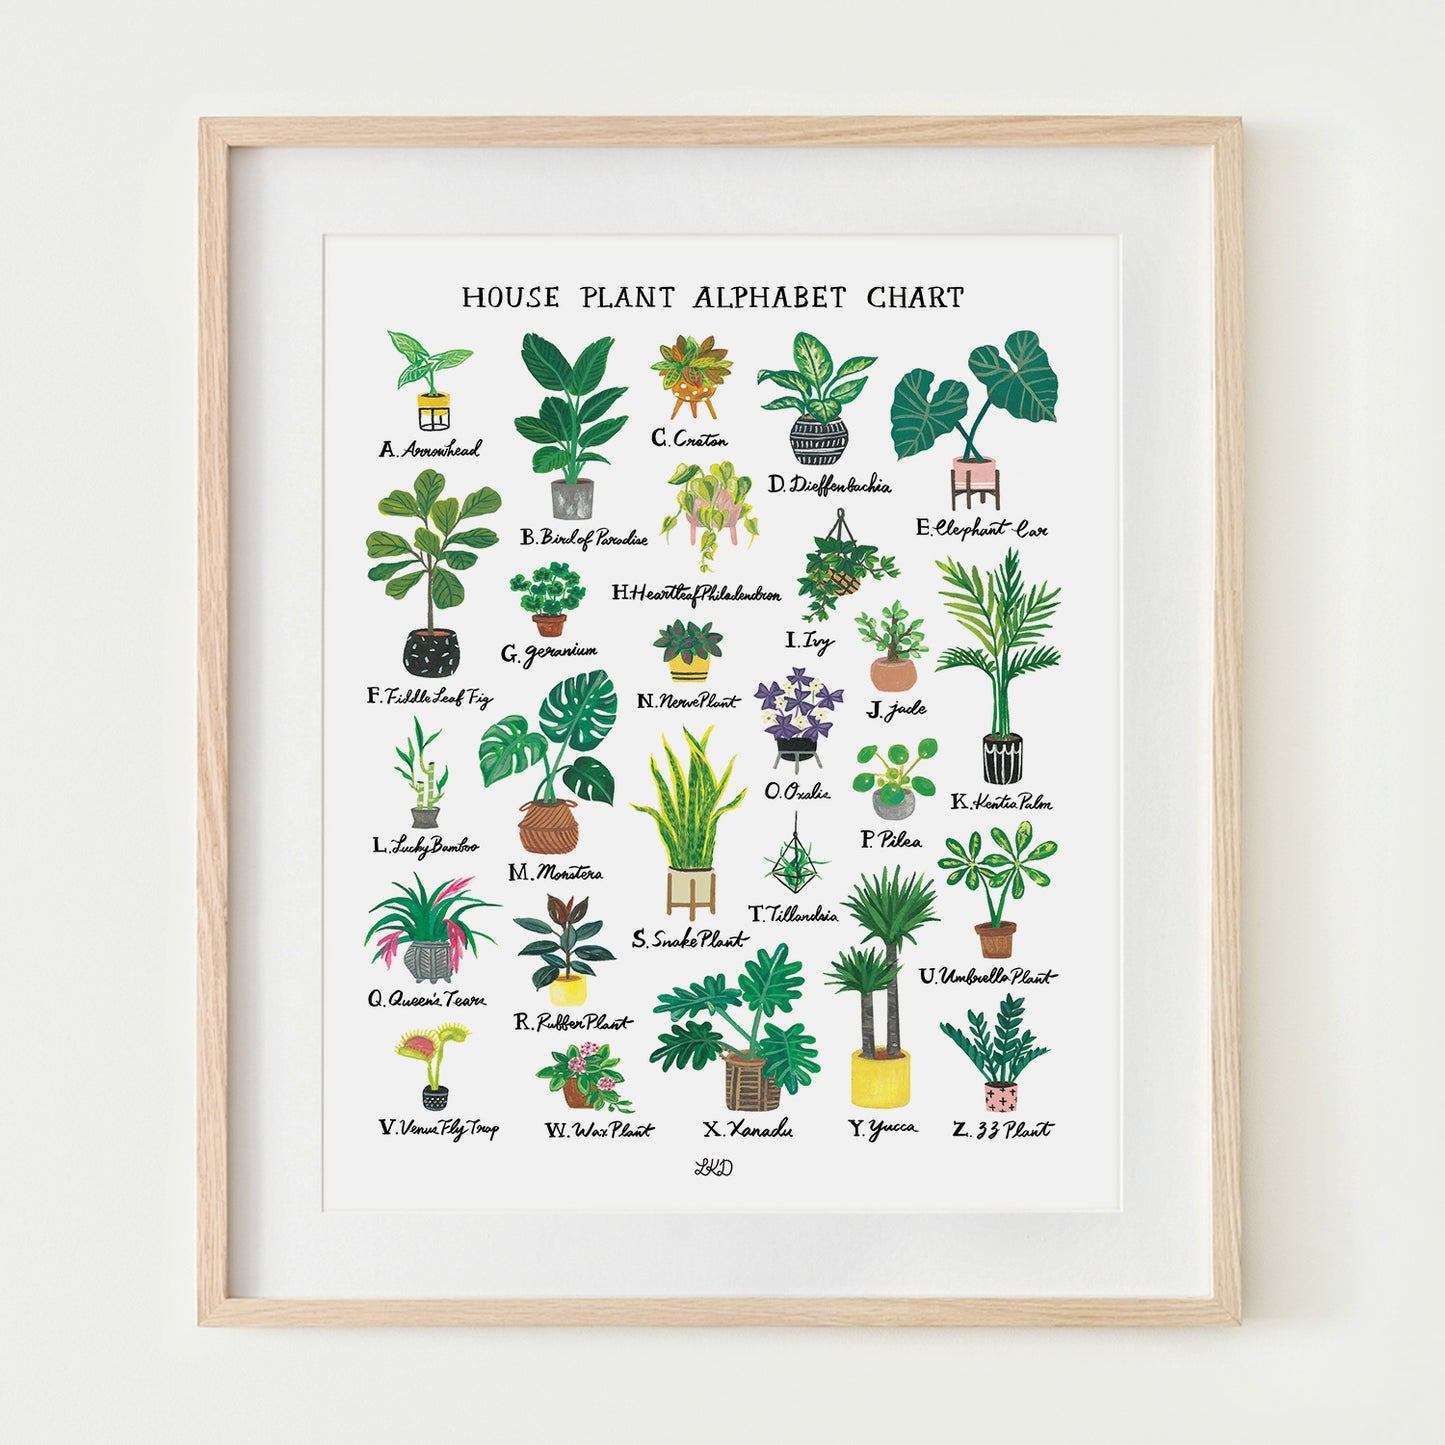 House Plant Alphabet Chart Art Print